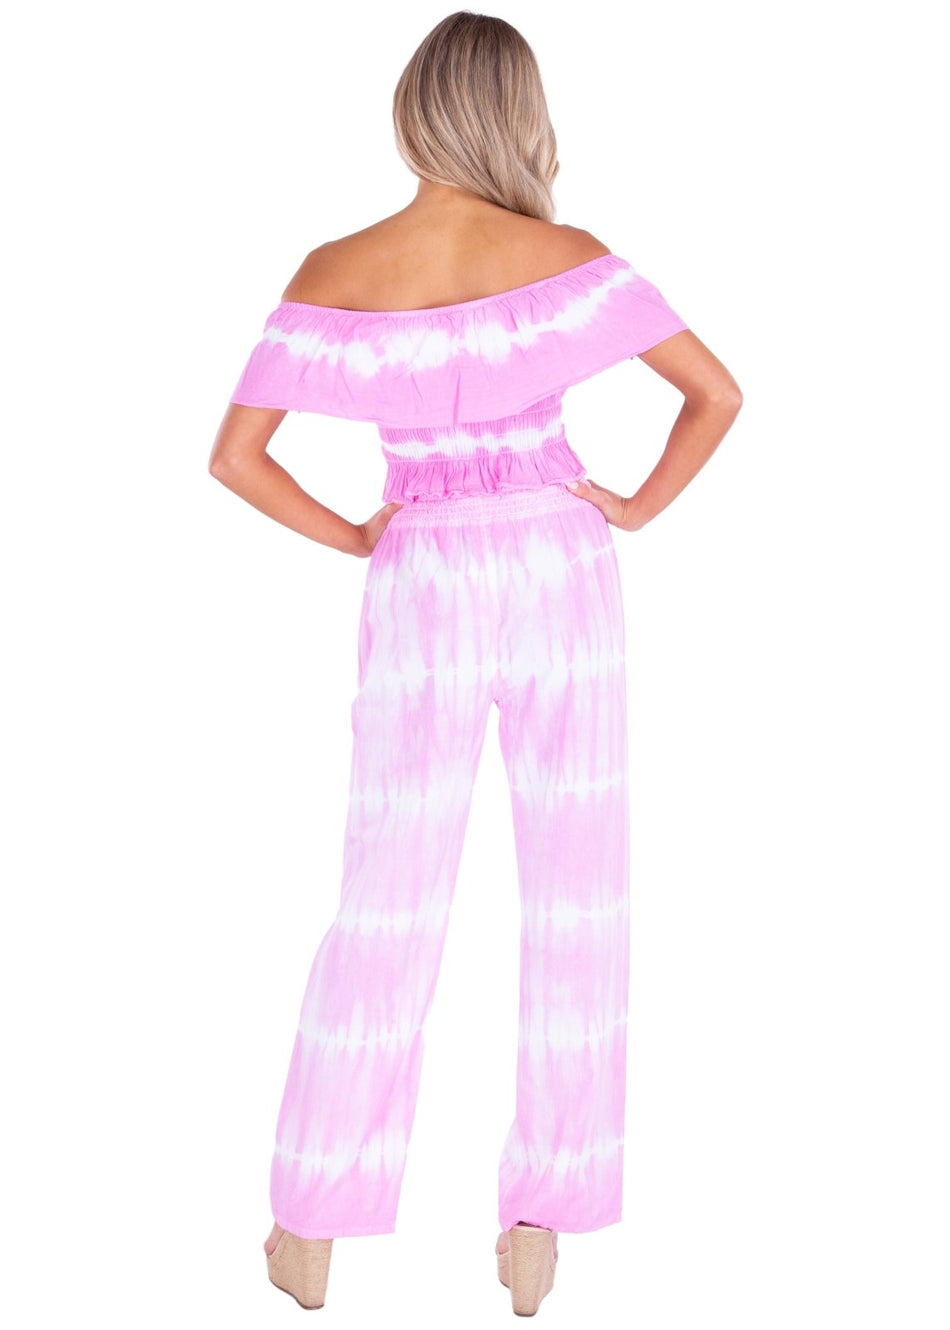 Magnolia' Crochet Front Detail Pants Pink Wash - Seaspice Resort Wear